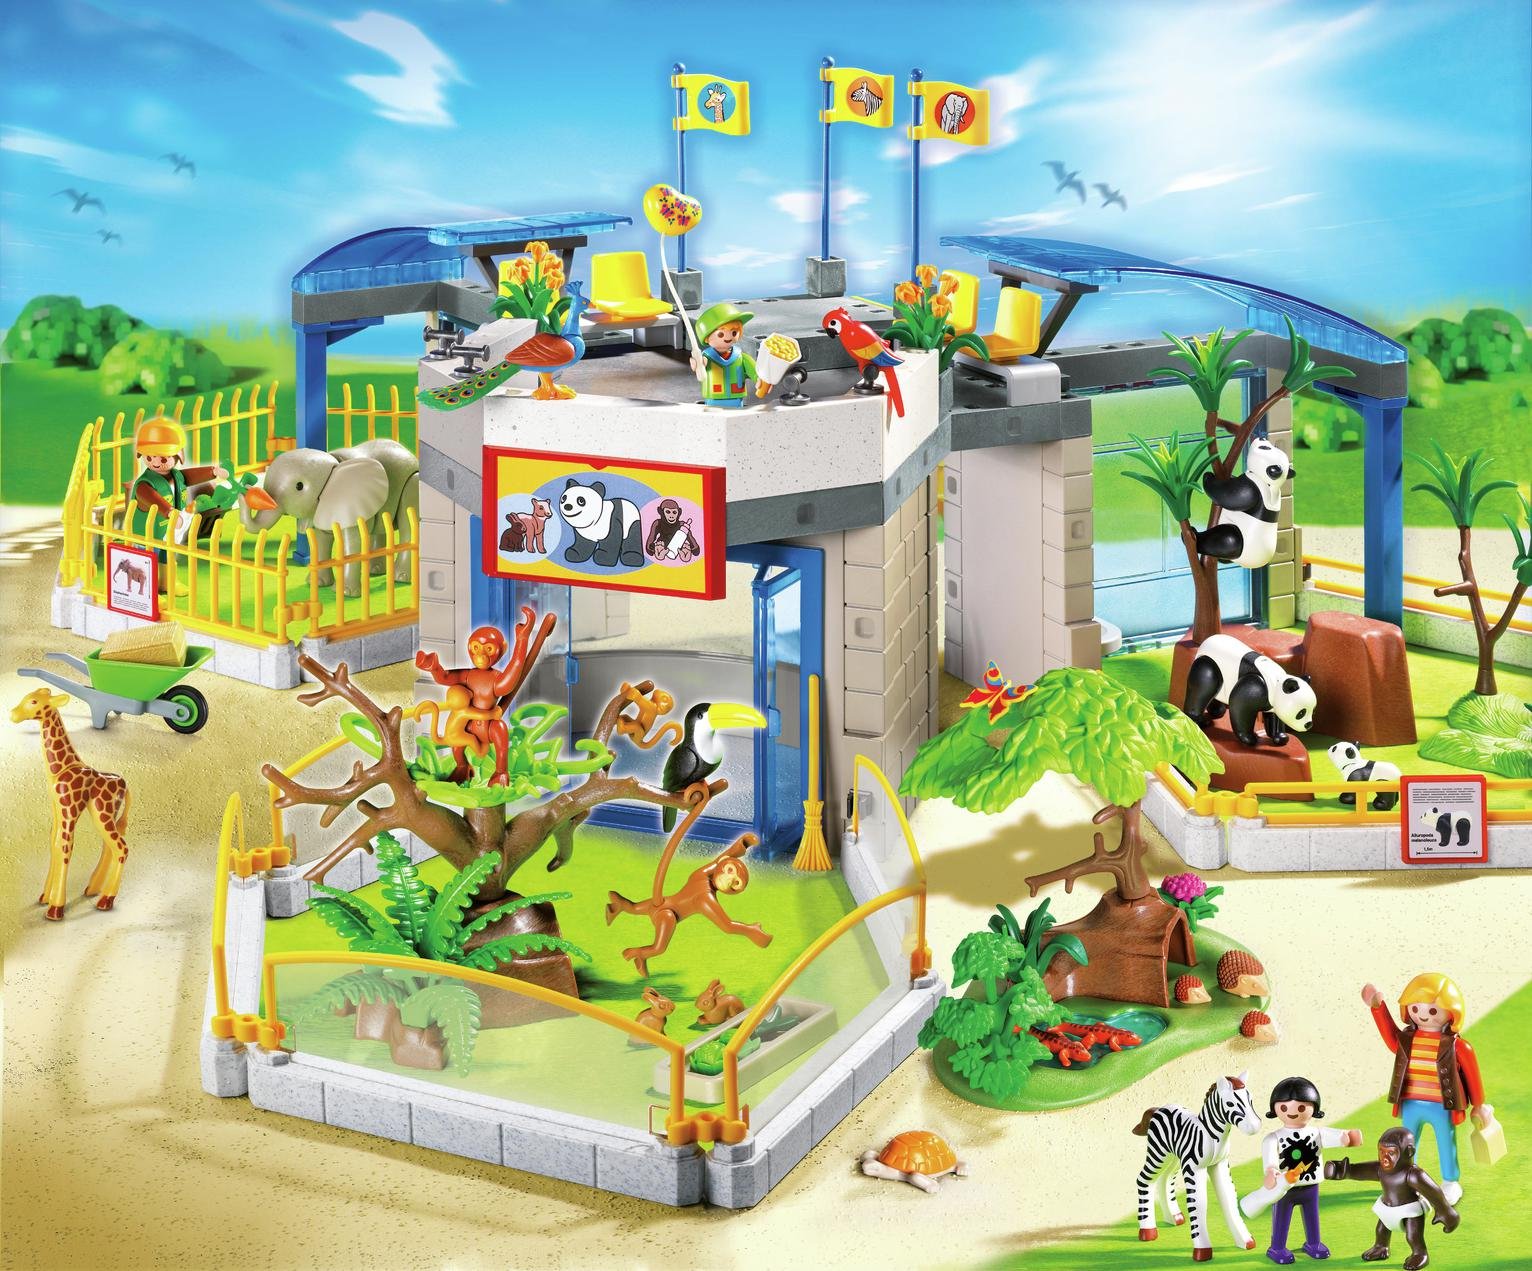 Playmobil 4093 City Life Animal Zoo Review